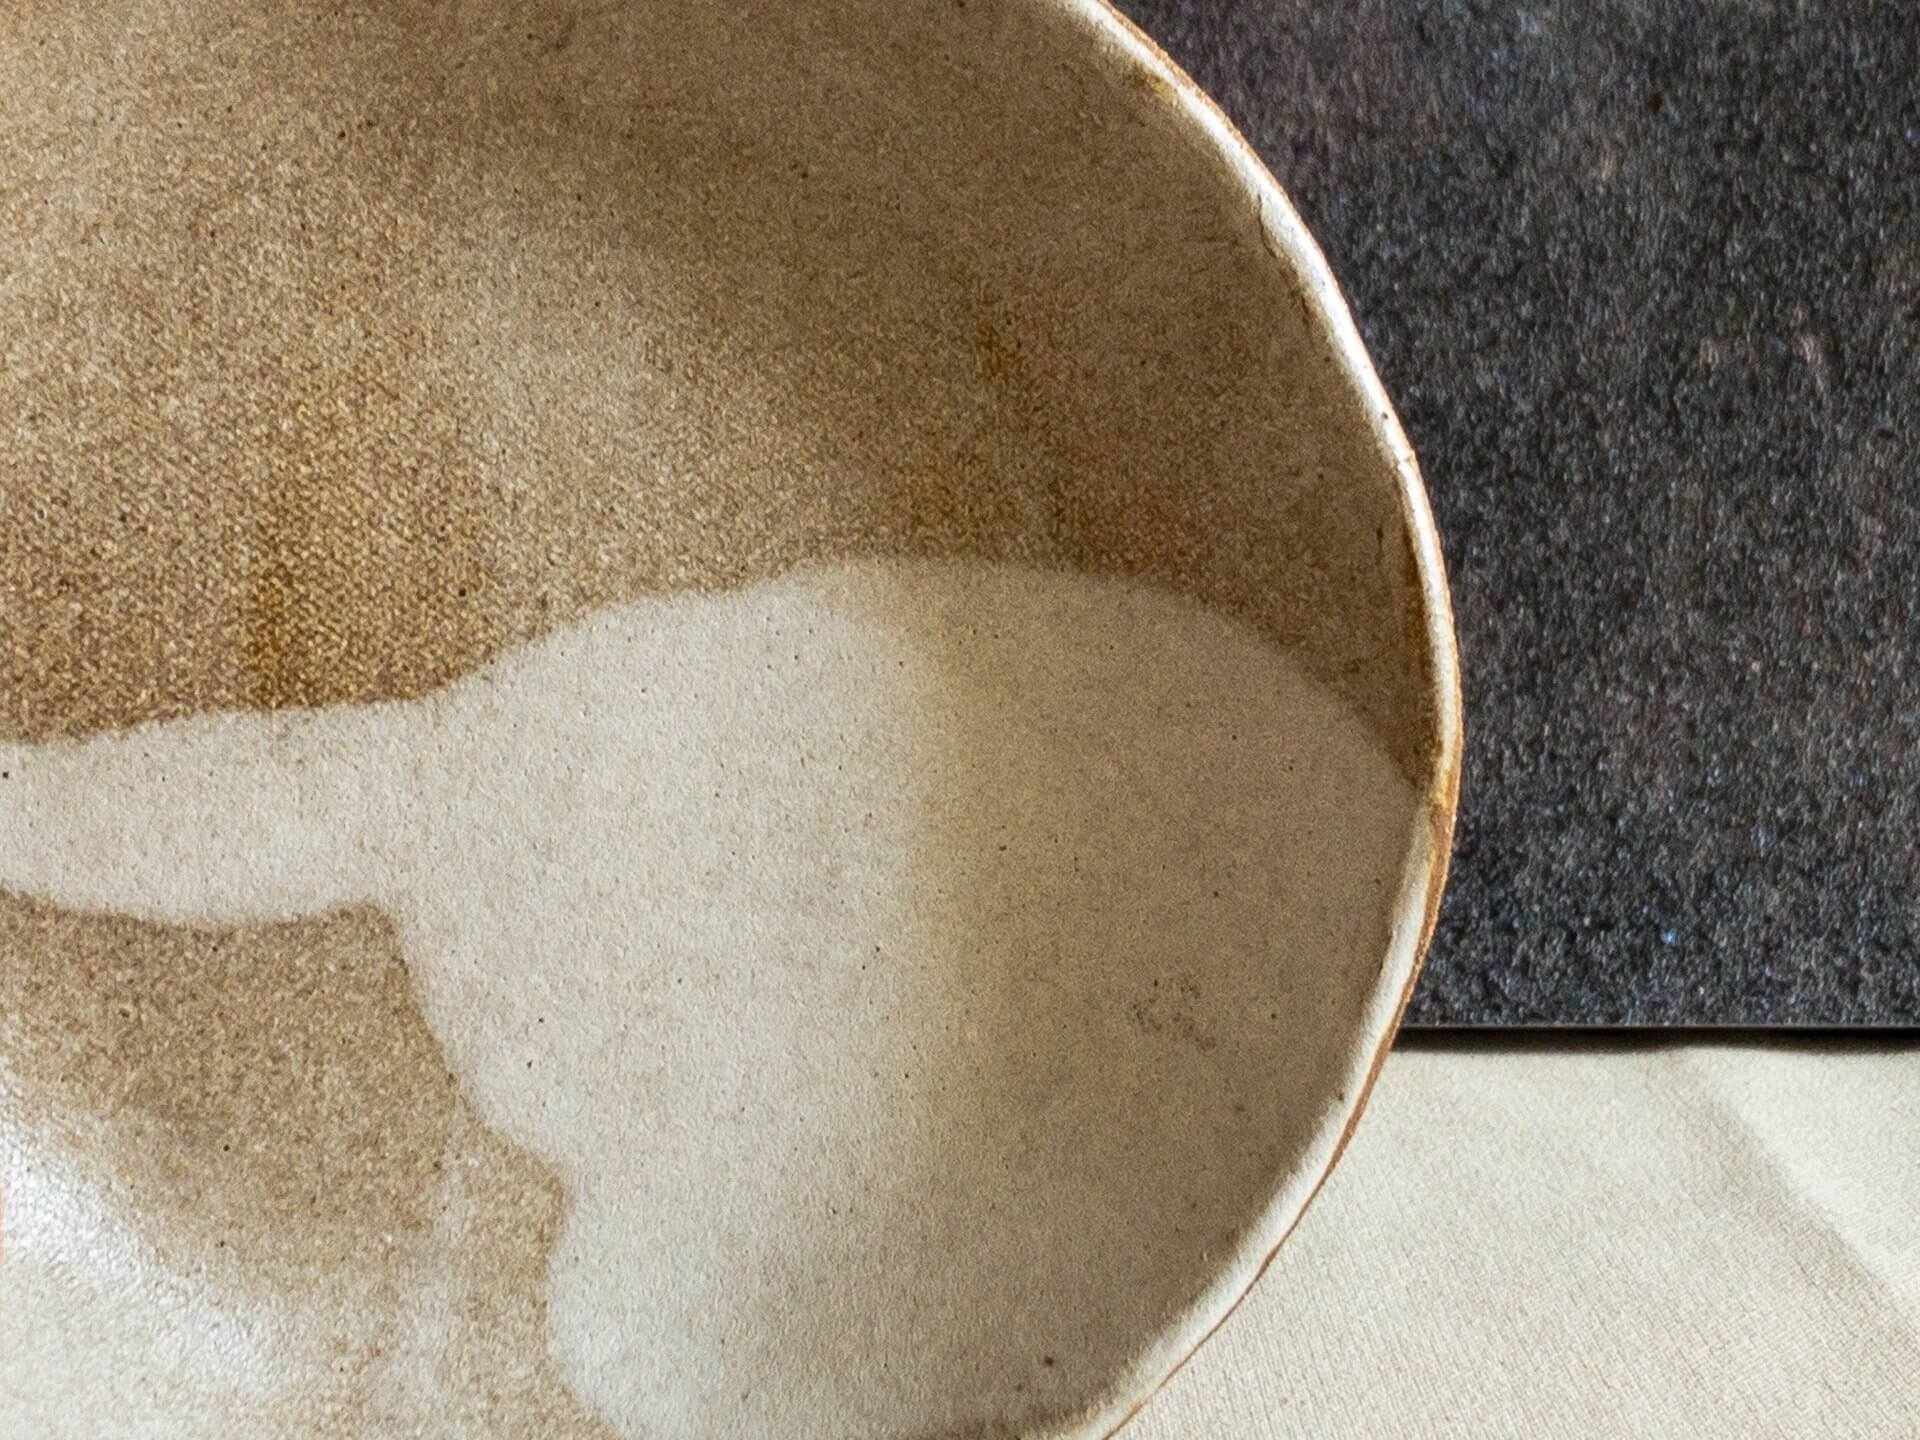 Puro Ceramics Shallow Toasted Bowl - Small